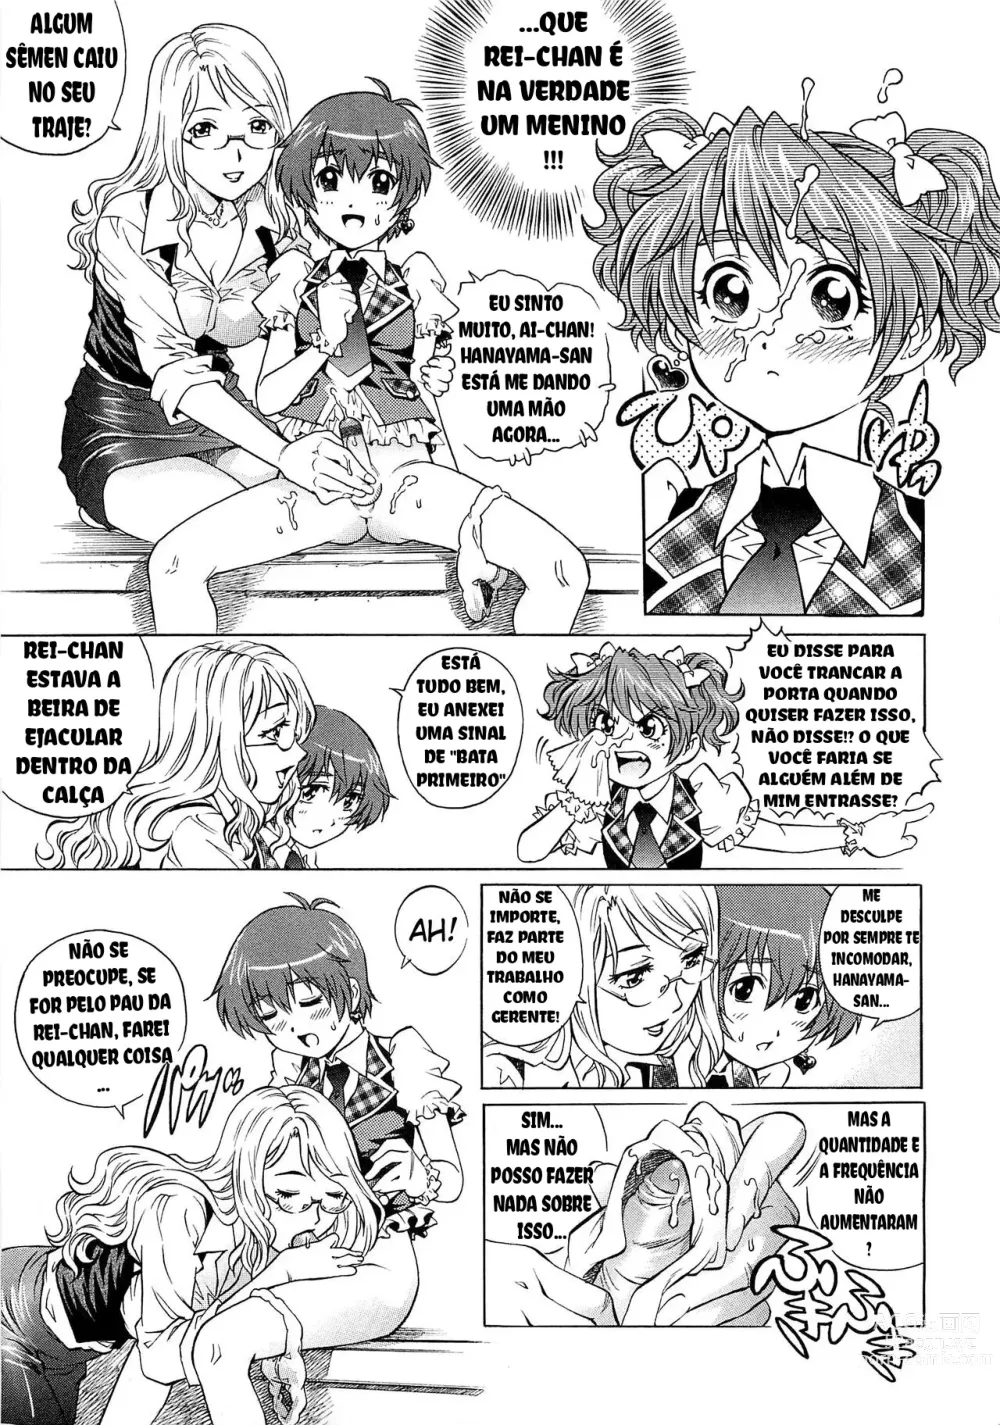 Page 3 of manga IdolMaster-bation